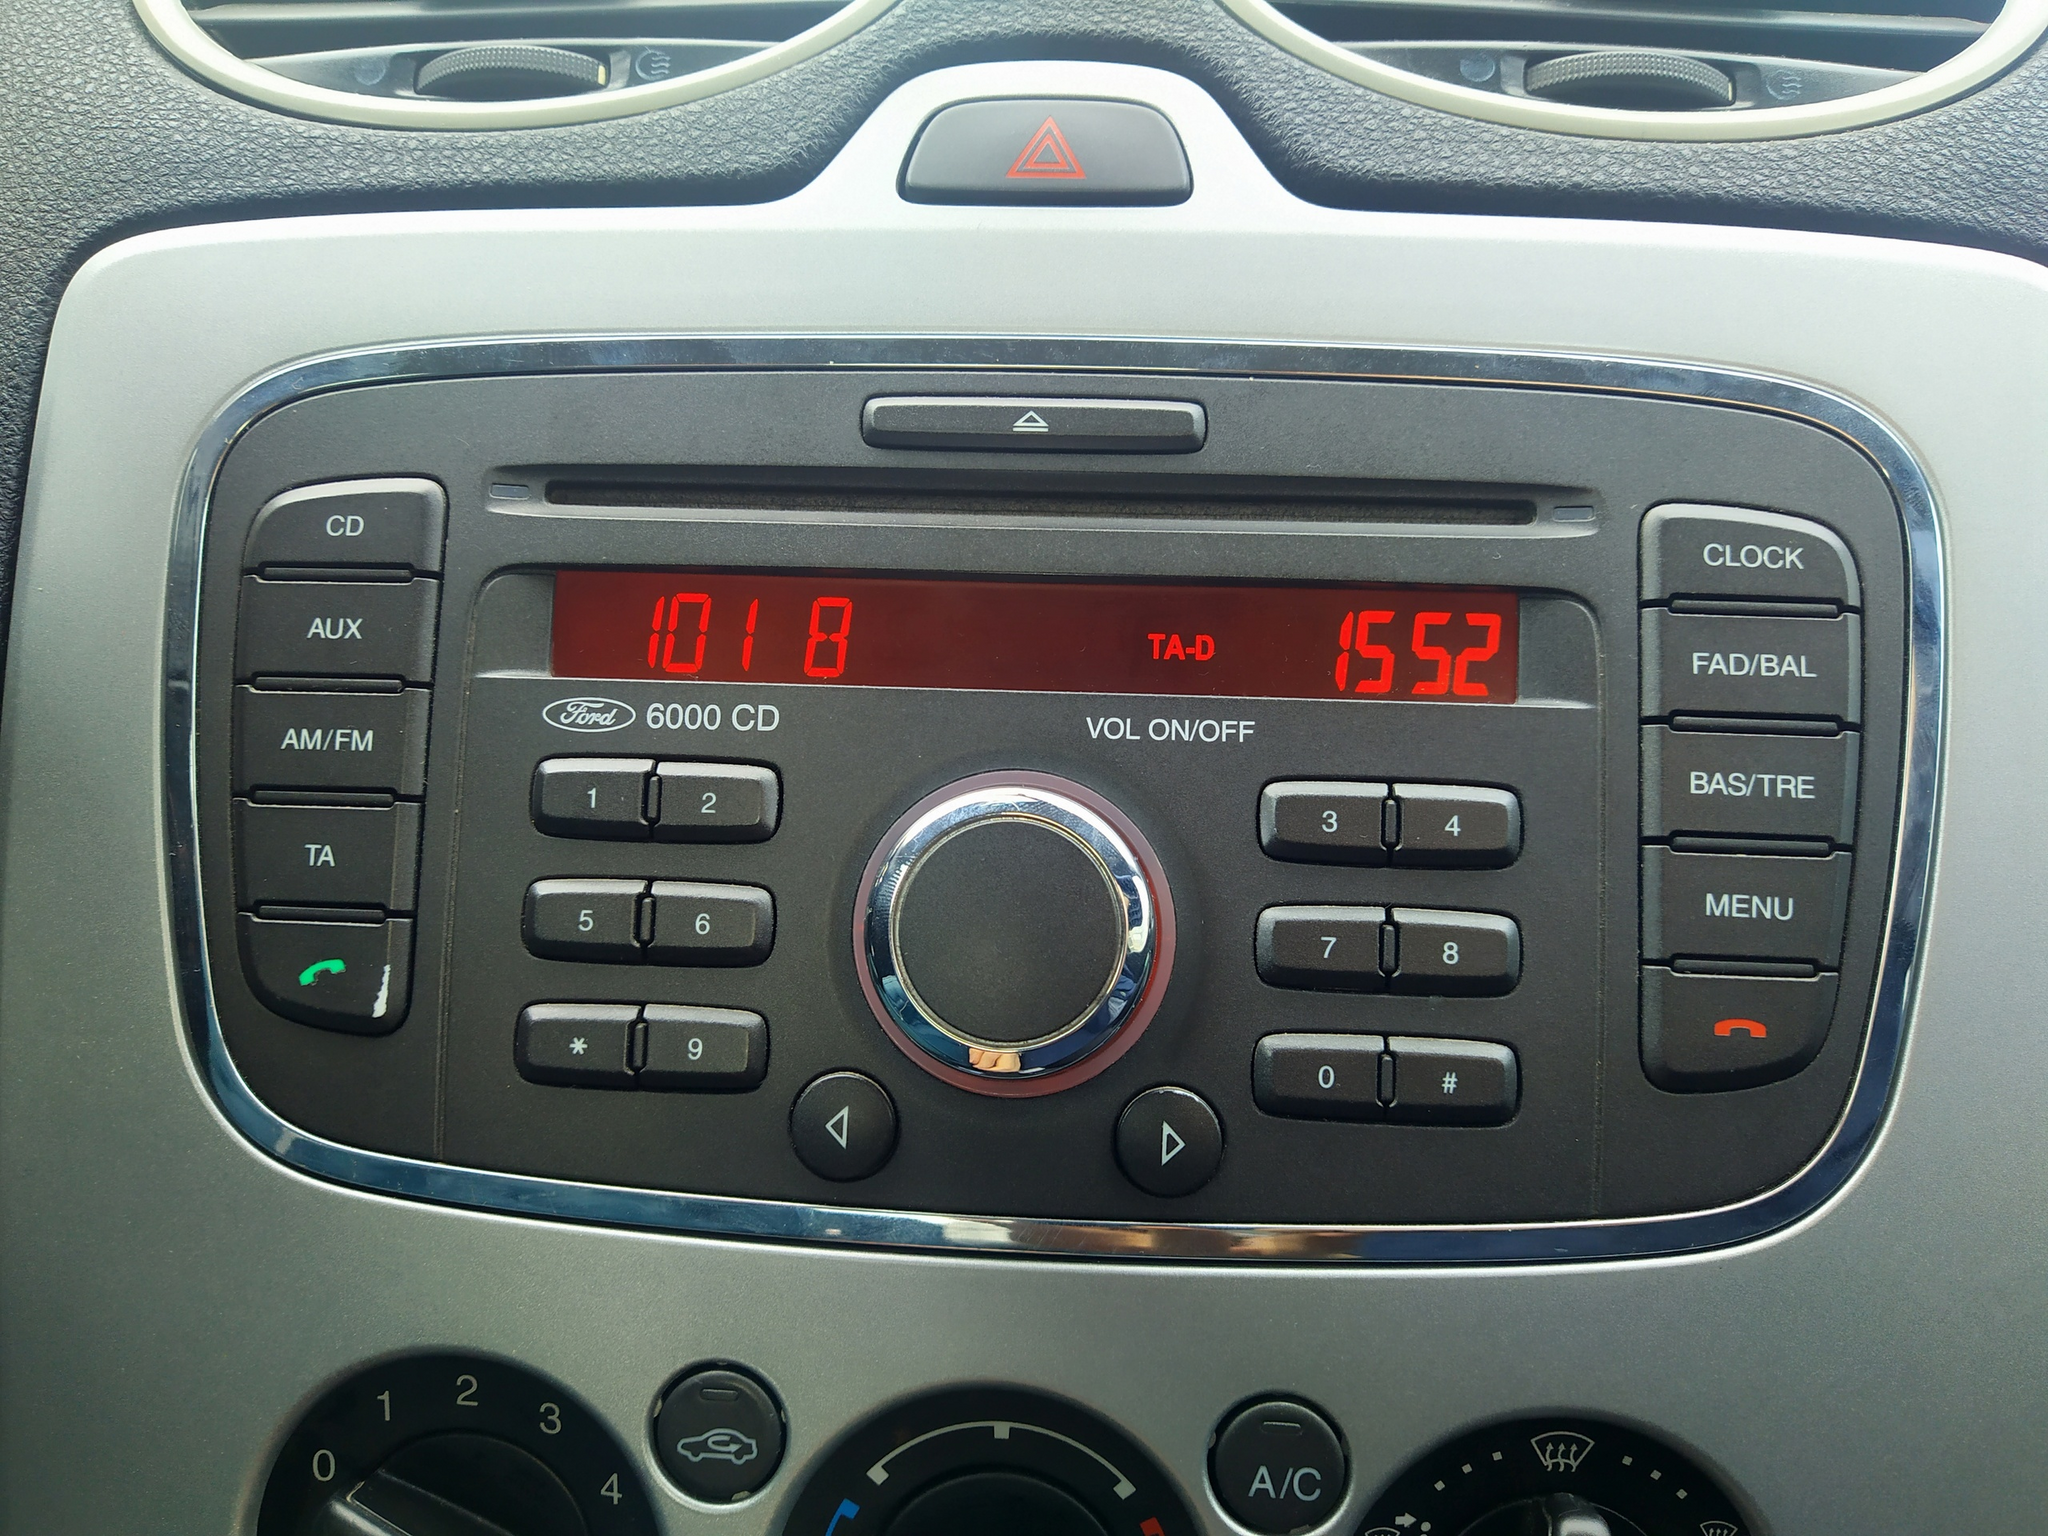 Автомагнитола Форд фокус 2 обозначение клавиш 6000cd. Размер магнитолы Ford Transit 6000 CD. Магнитола Форд 6000cd предохранитель. Что такое магнитола дефектов. Магнитола форд 6000 cd